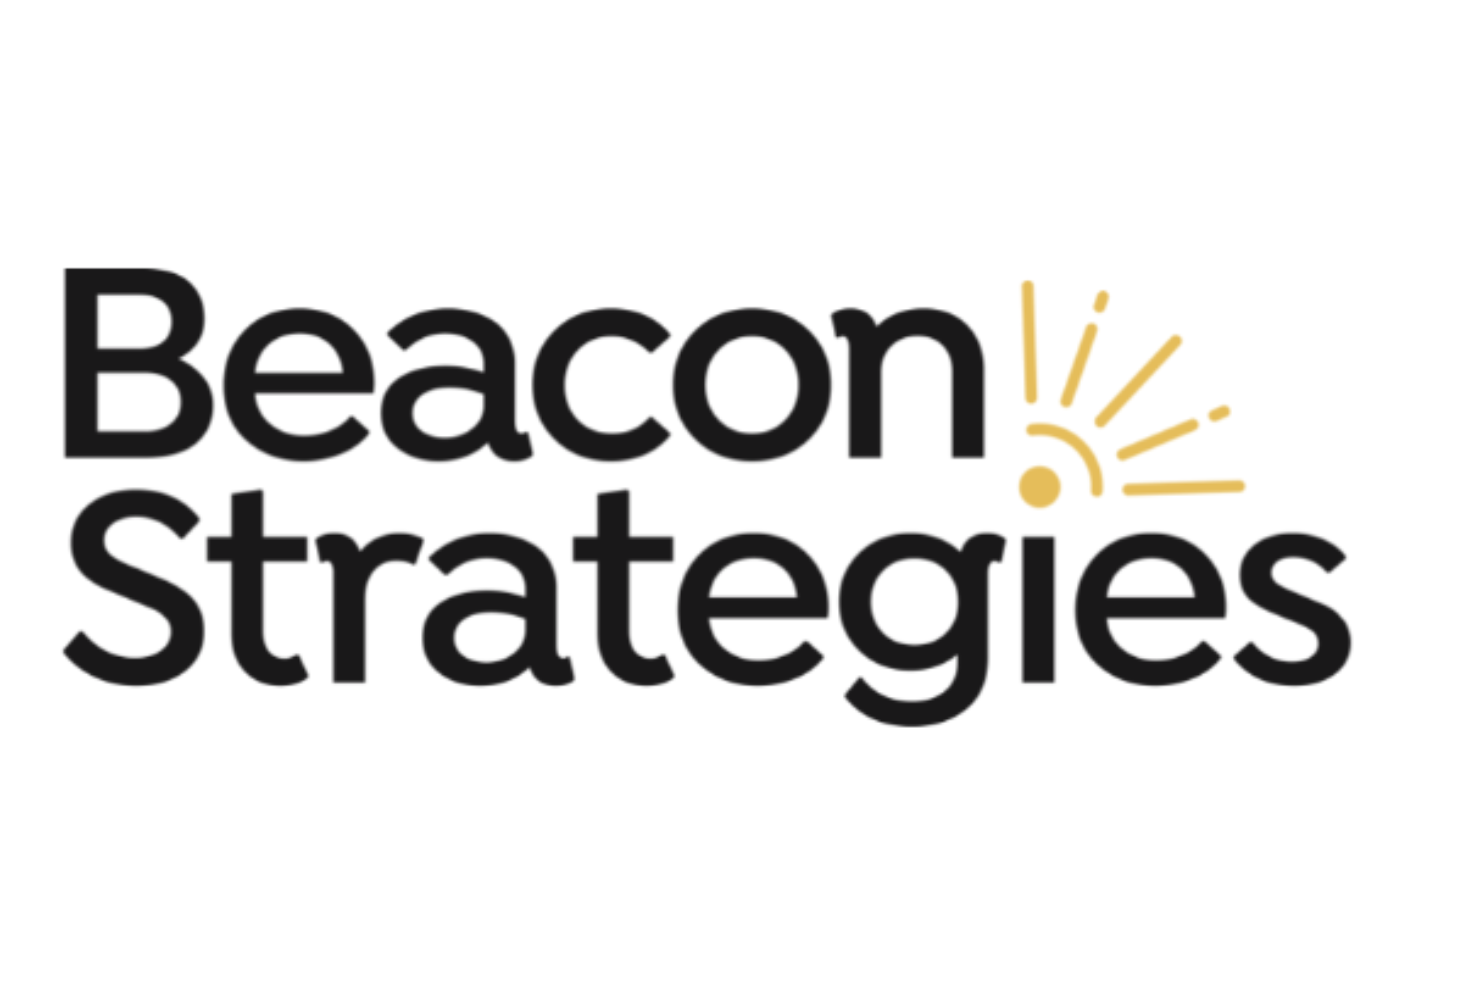 Beacon strategies logo